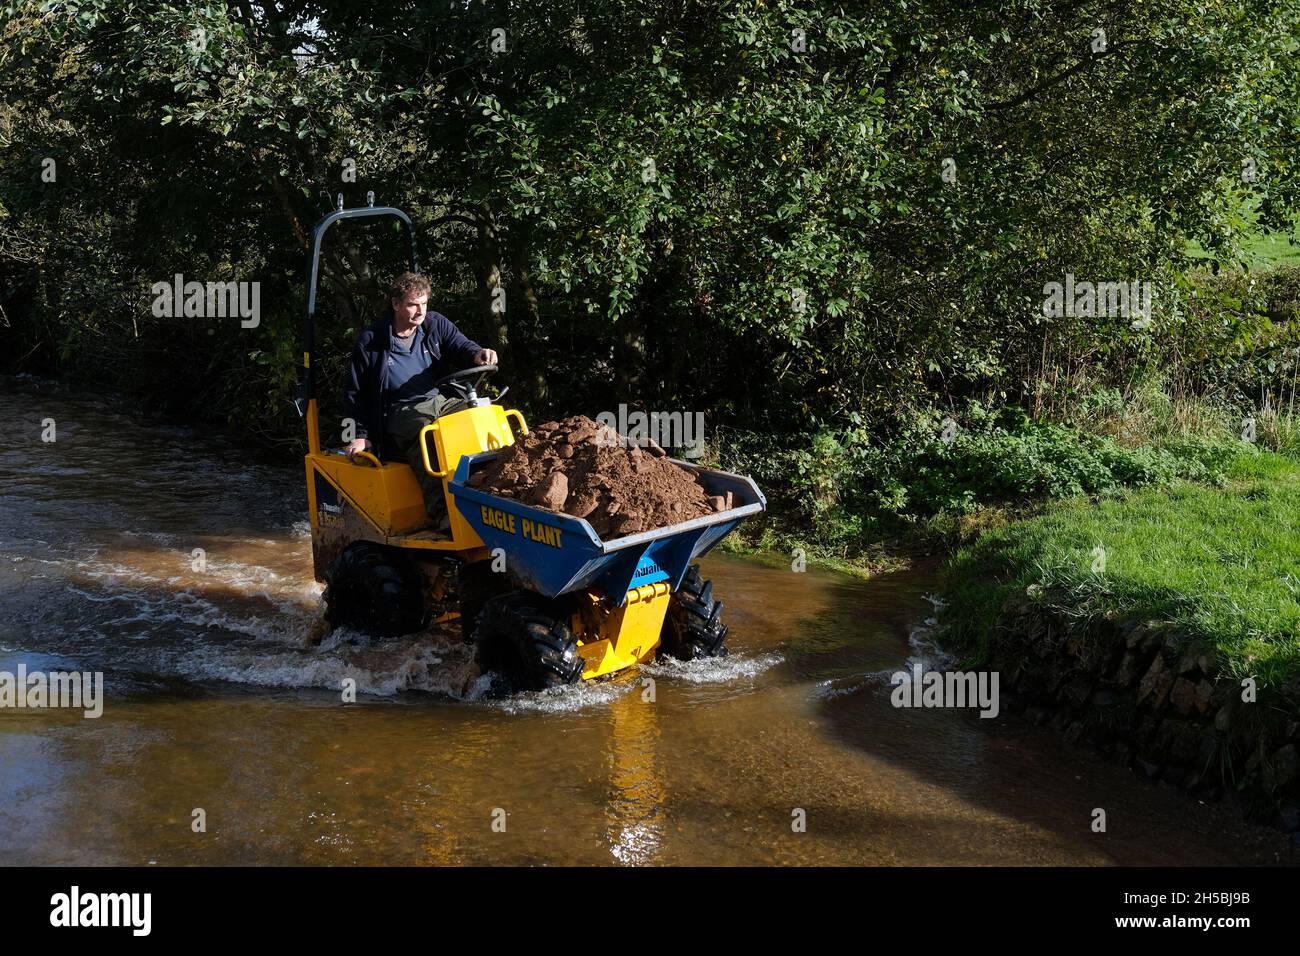 Un hombre conduciendo un pequeño transportador terrestre a través del agua en Dunster, Somerset. Foto de stock